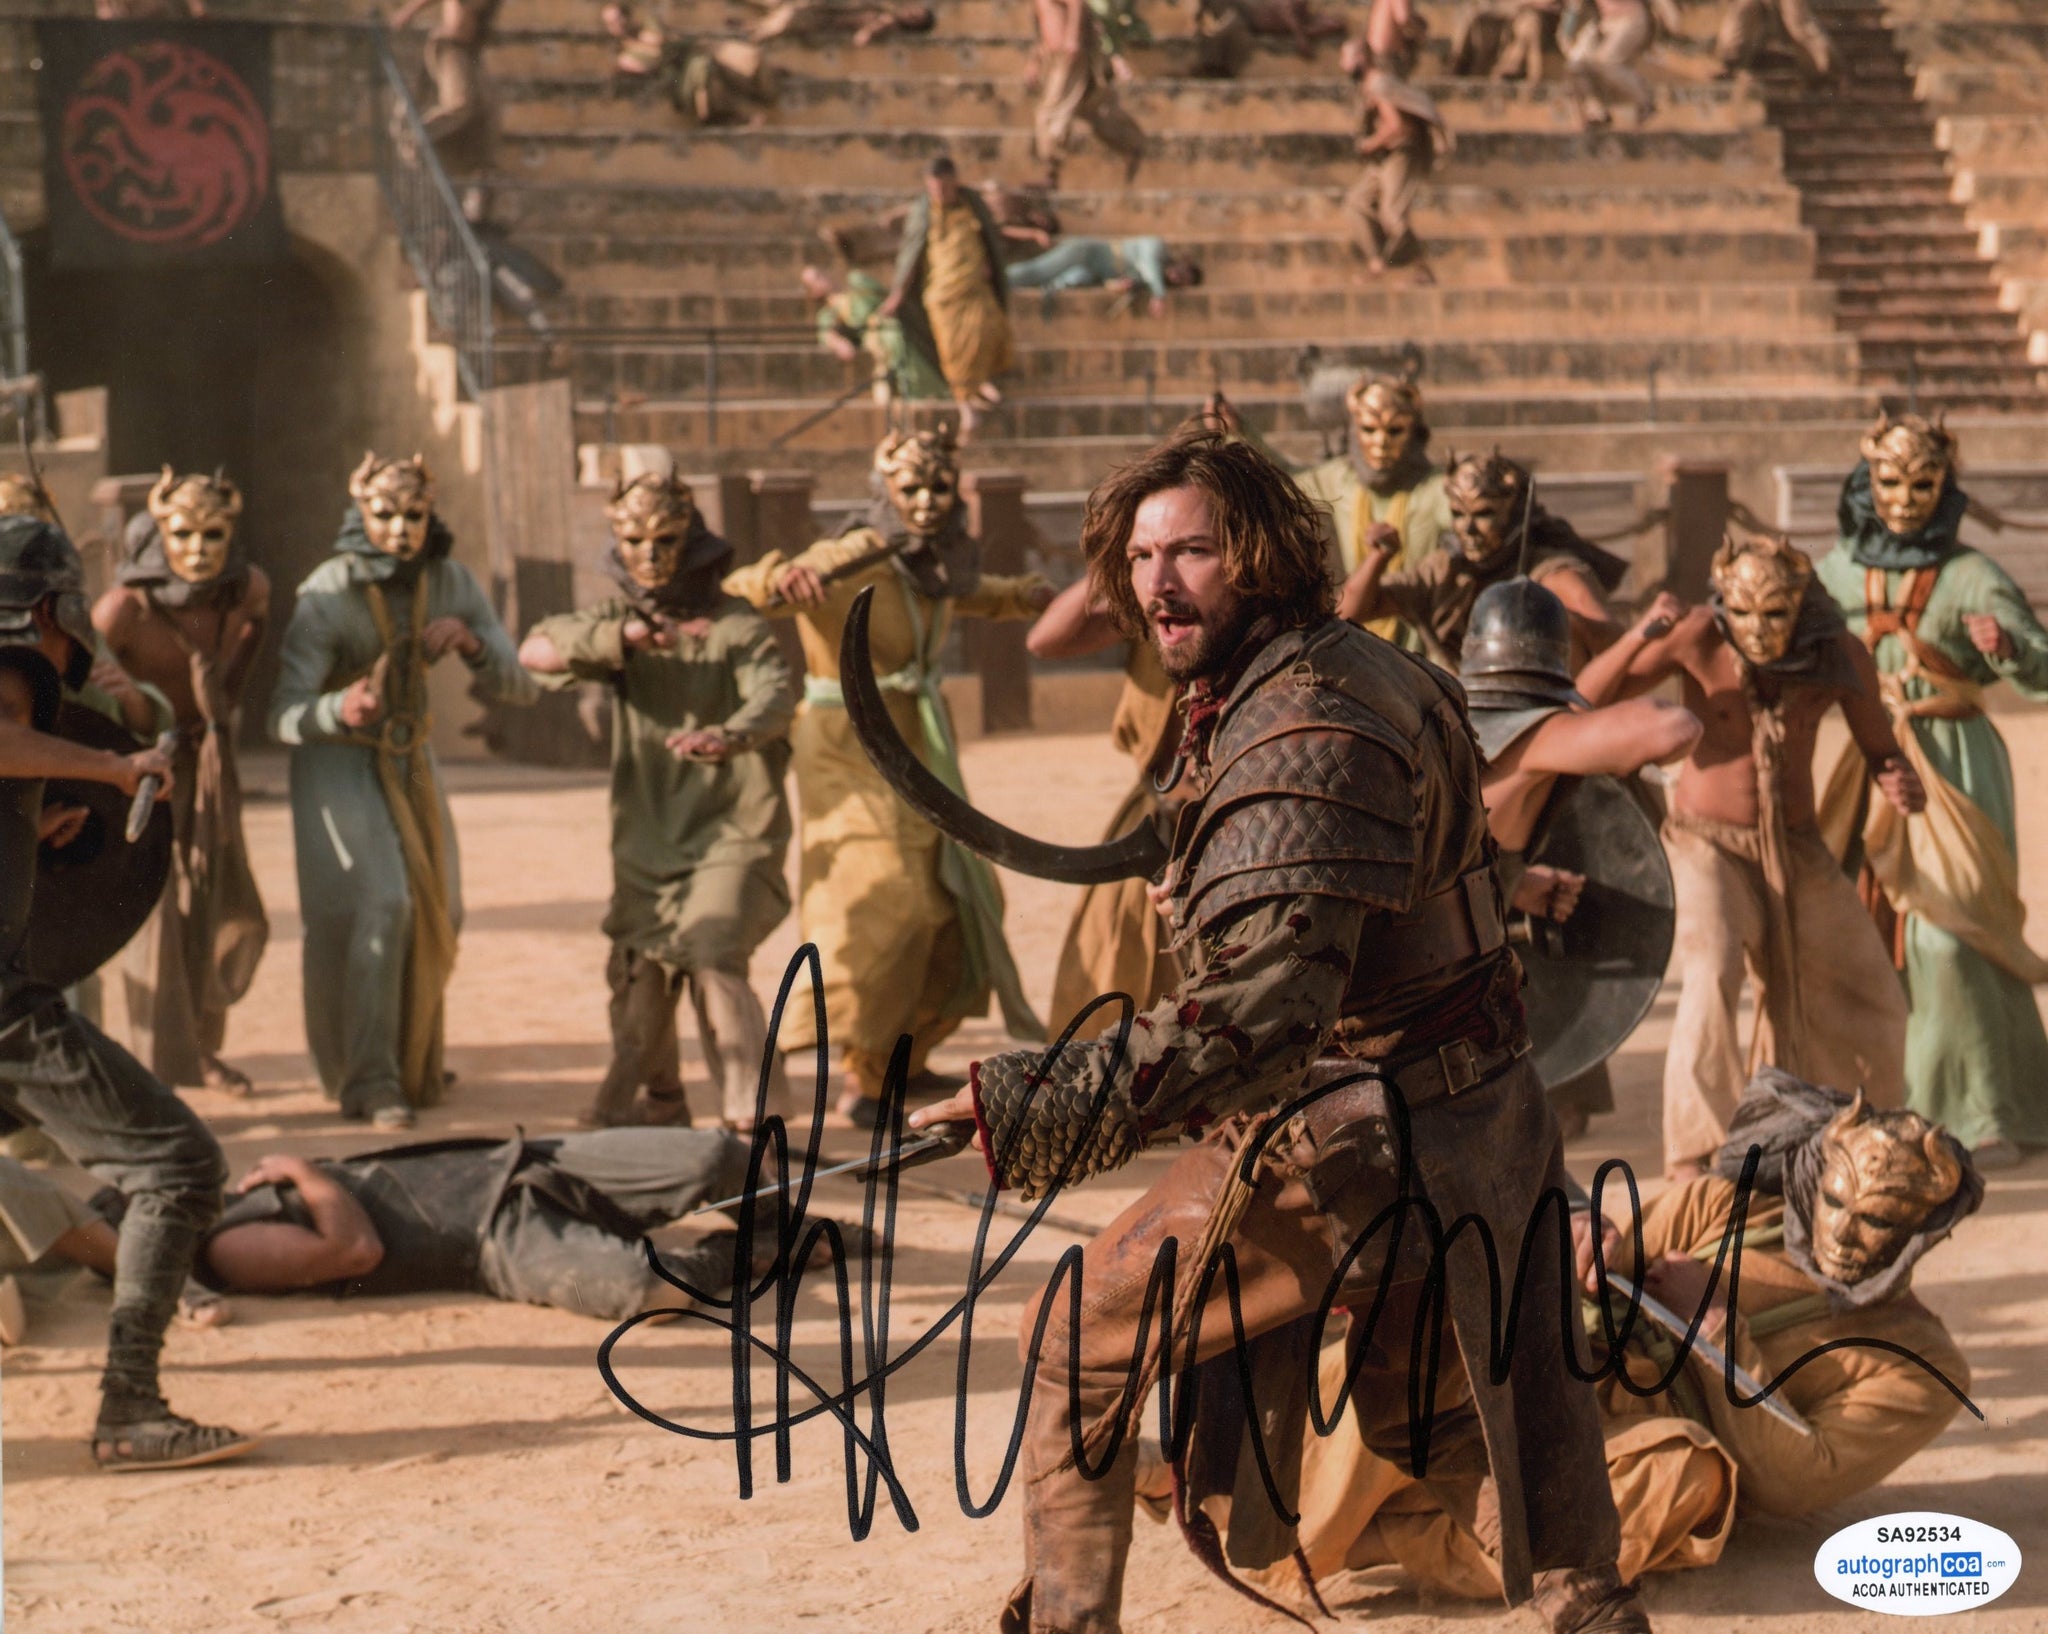 Michiel Huisman Game of Thrones Signed Autograph 8x10 Photo ACOA